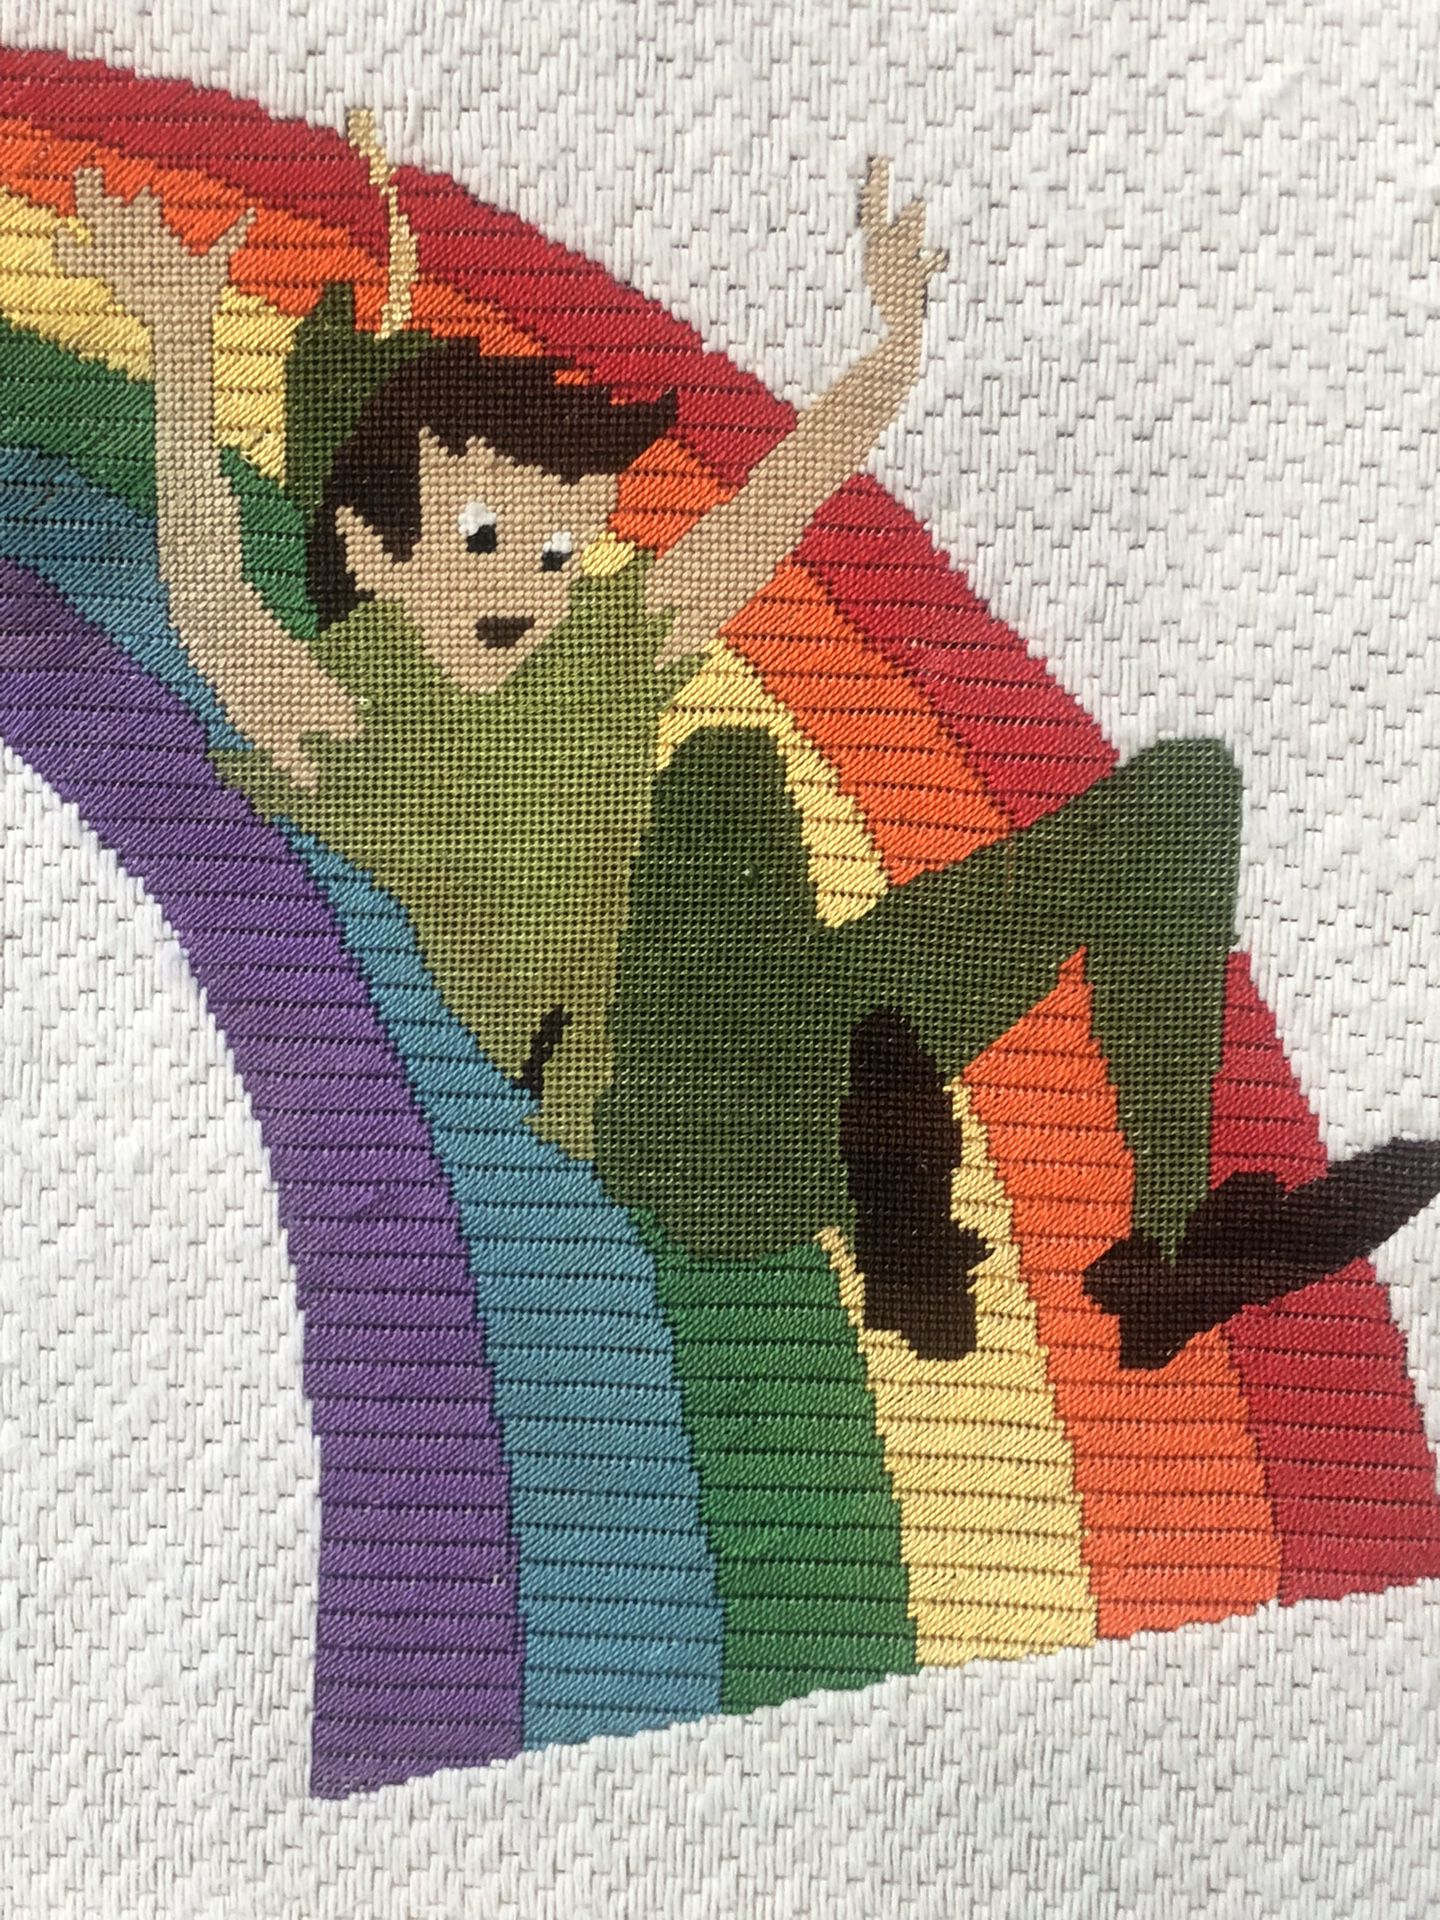 VNTG Hand Embroidered Disney Peter Pan Sliding Down Rainbow Artwork 